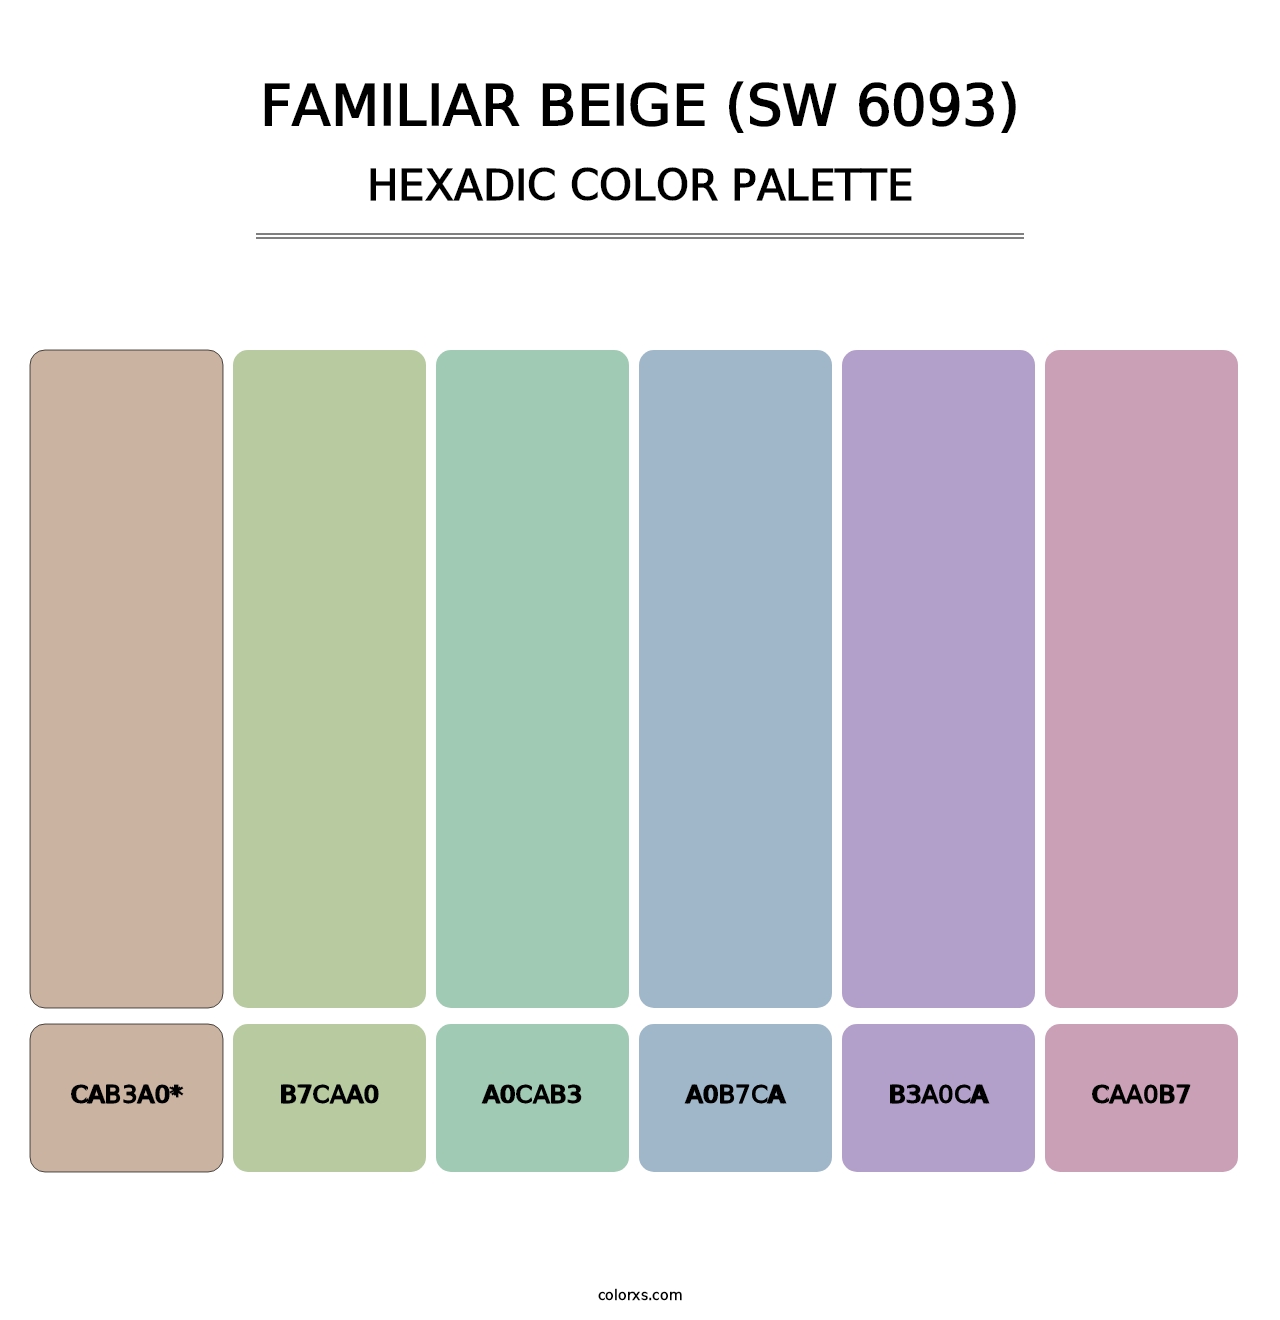 Familiar Beige (SW 6093) - Hexadic Color Palette